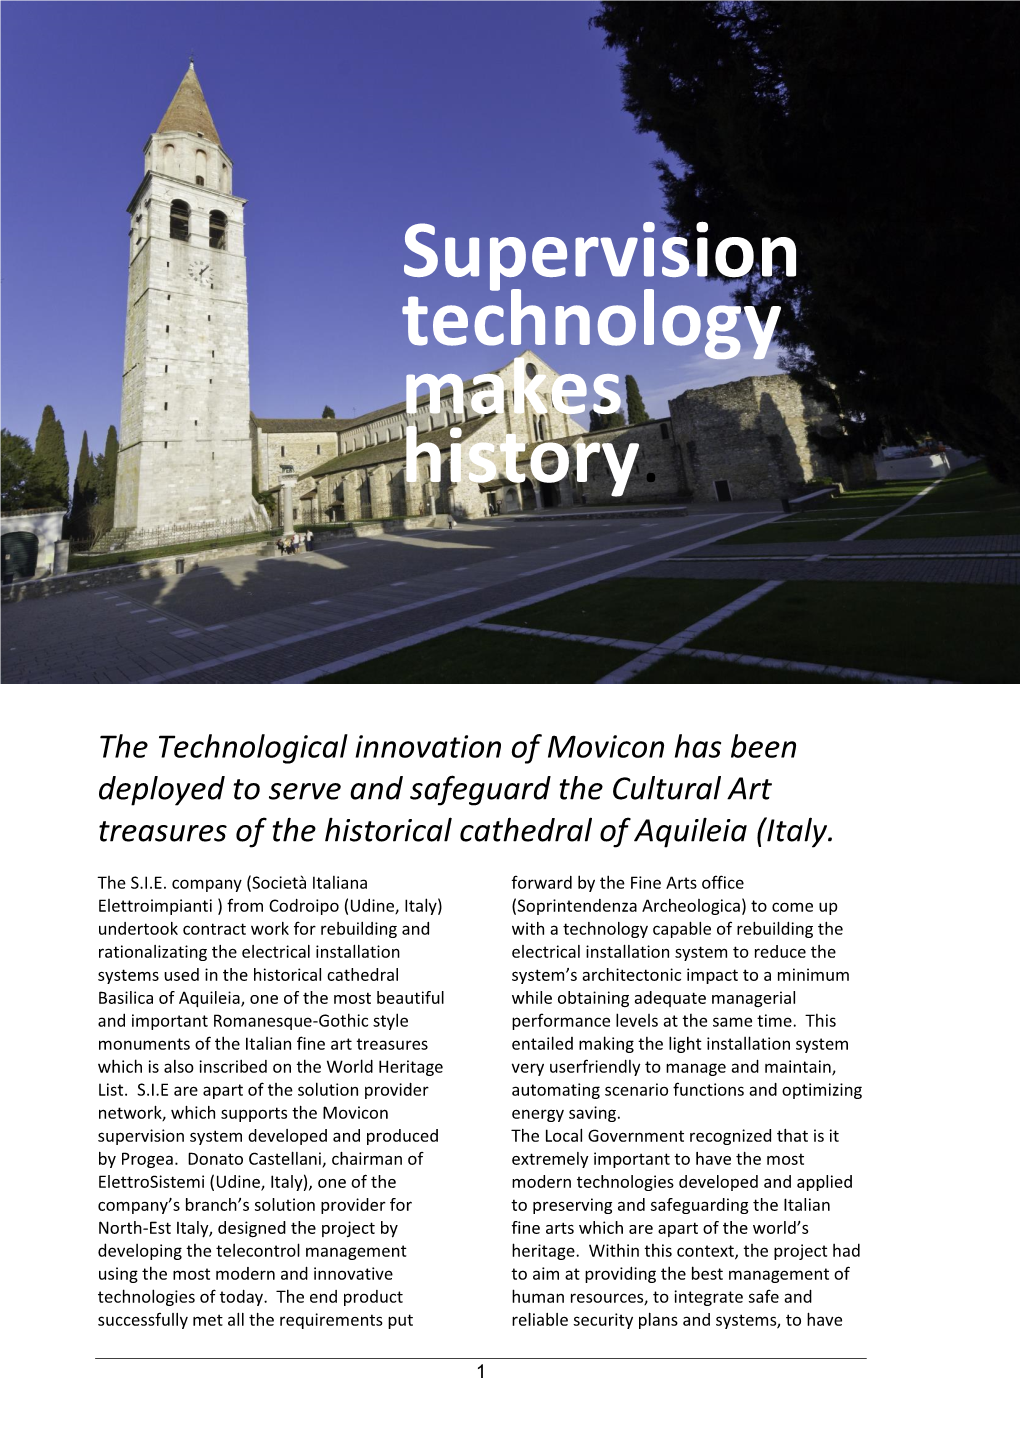 Basilica Di Aquileia, Quando La Tecnologia Supervisiona La Storia